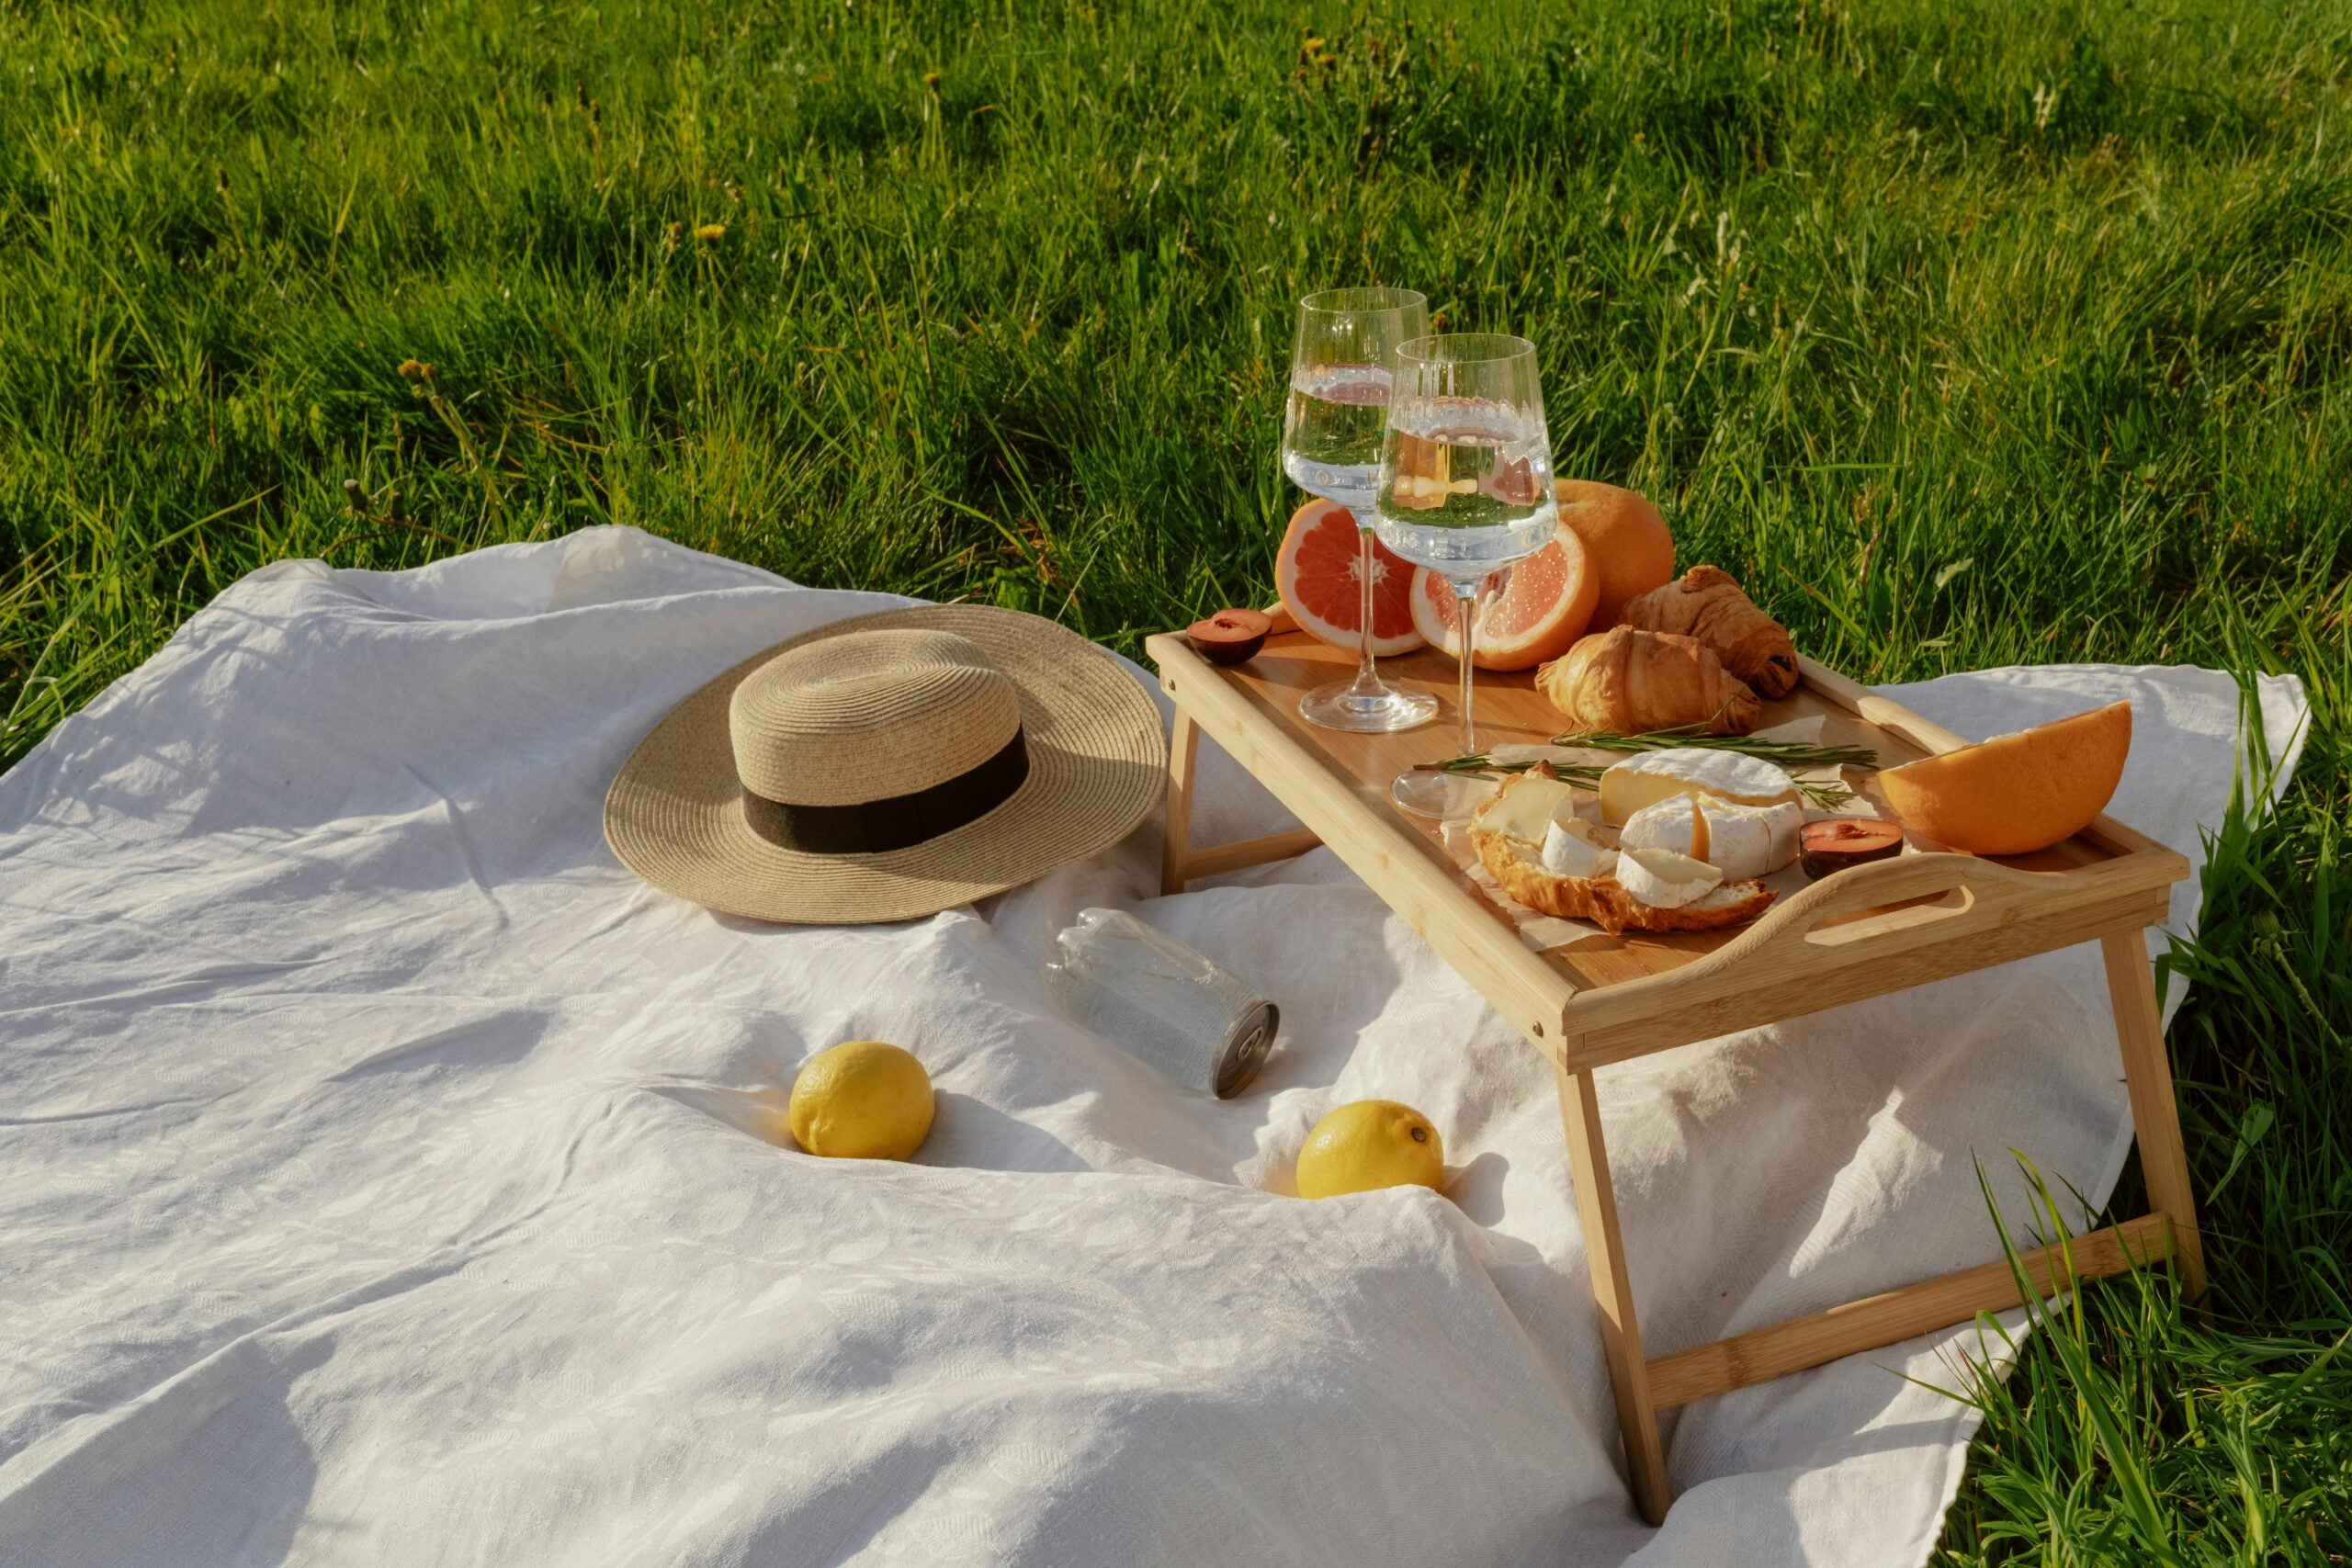 outdoor picnic